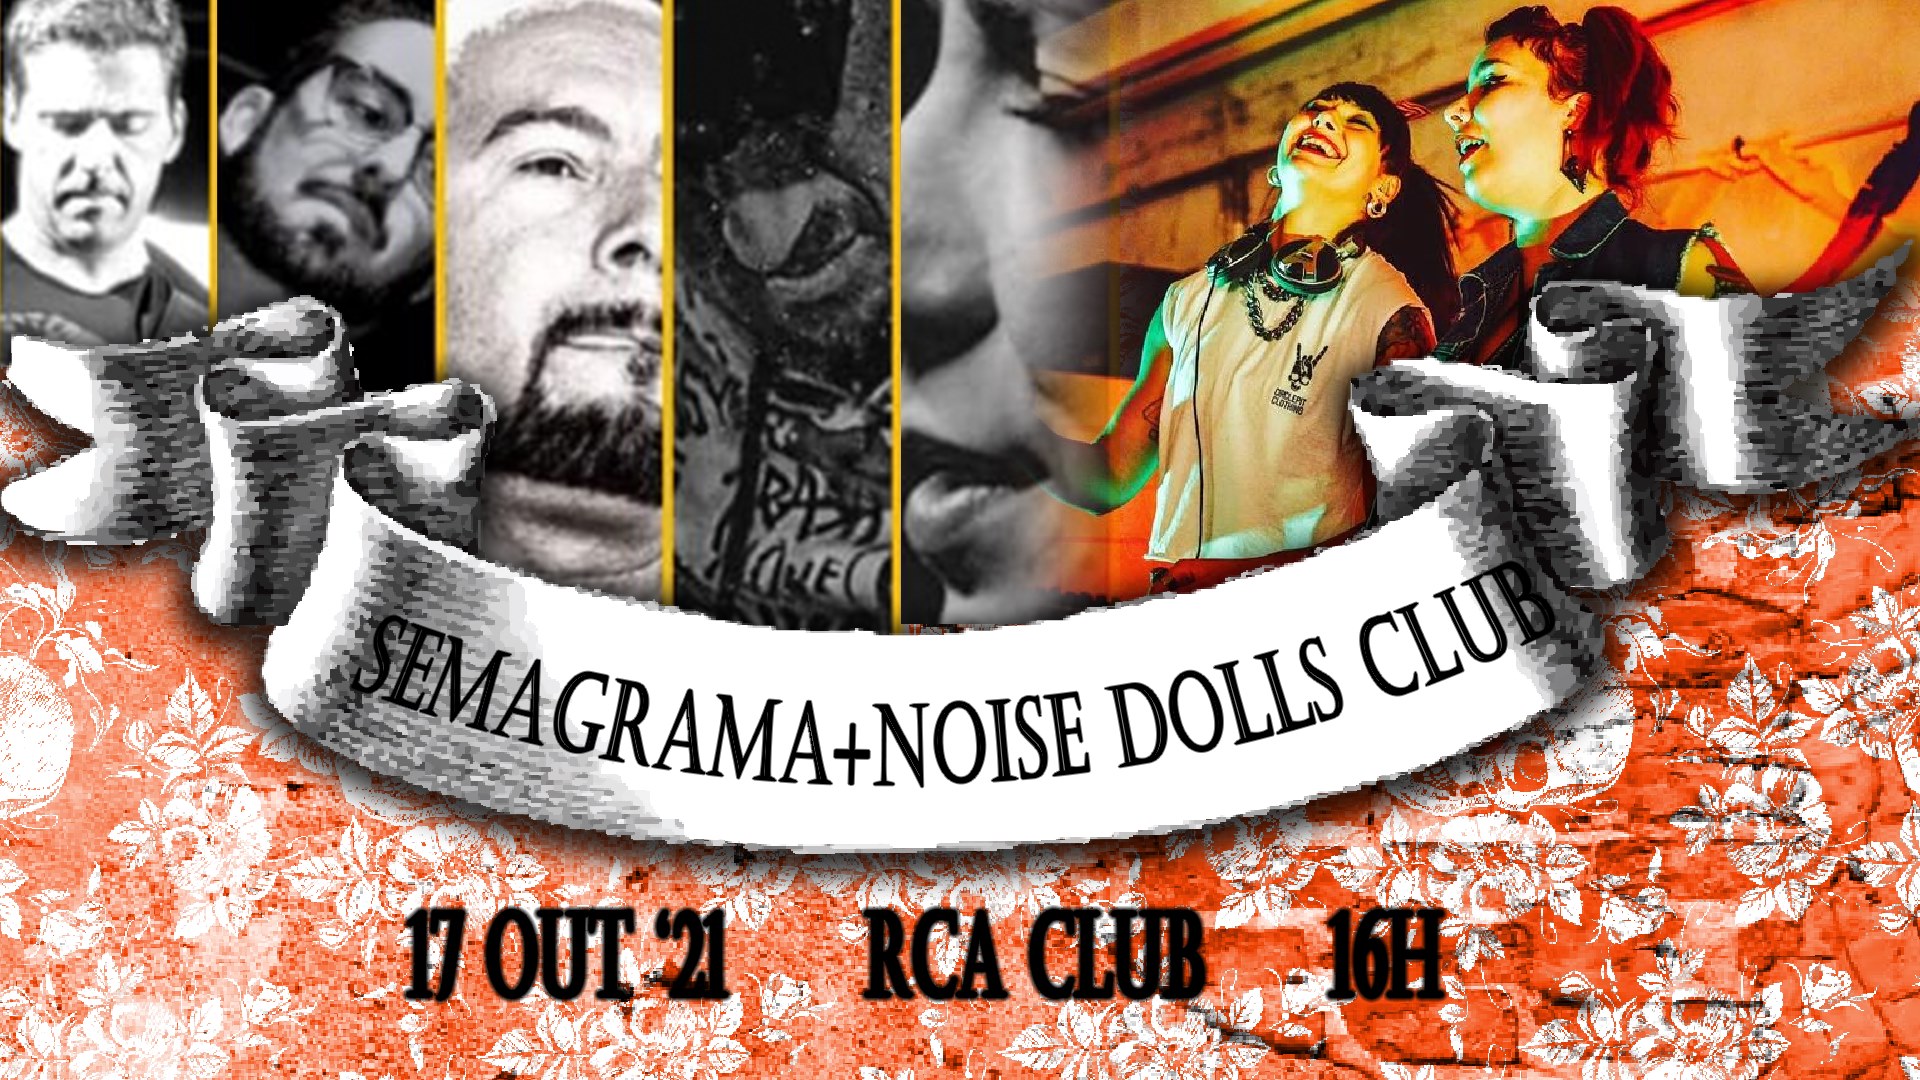 SEMAGRAMA + NOISE DOLLS CLUB (DJ SET)